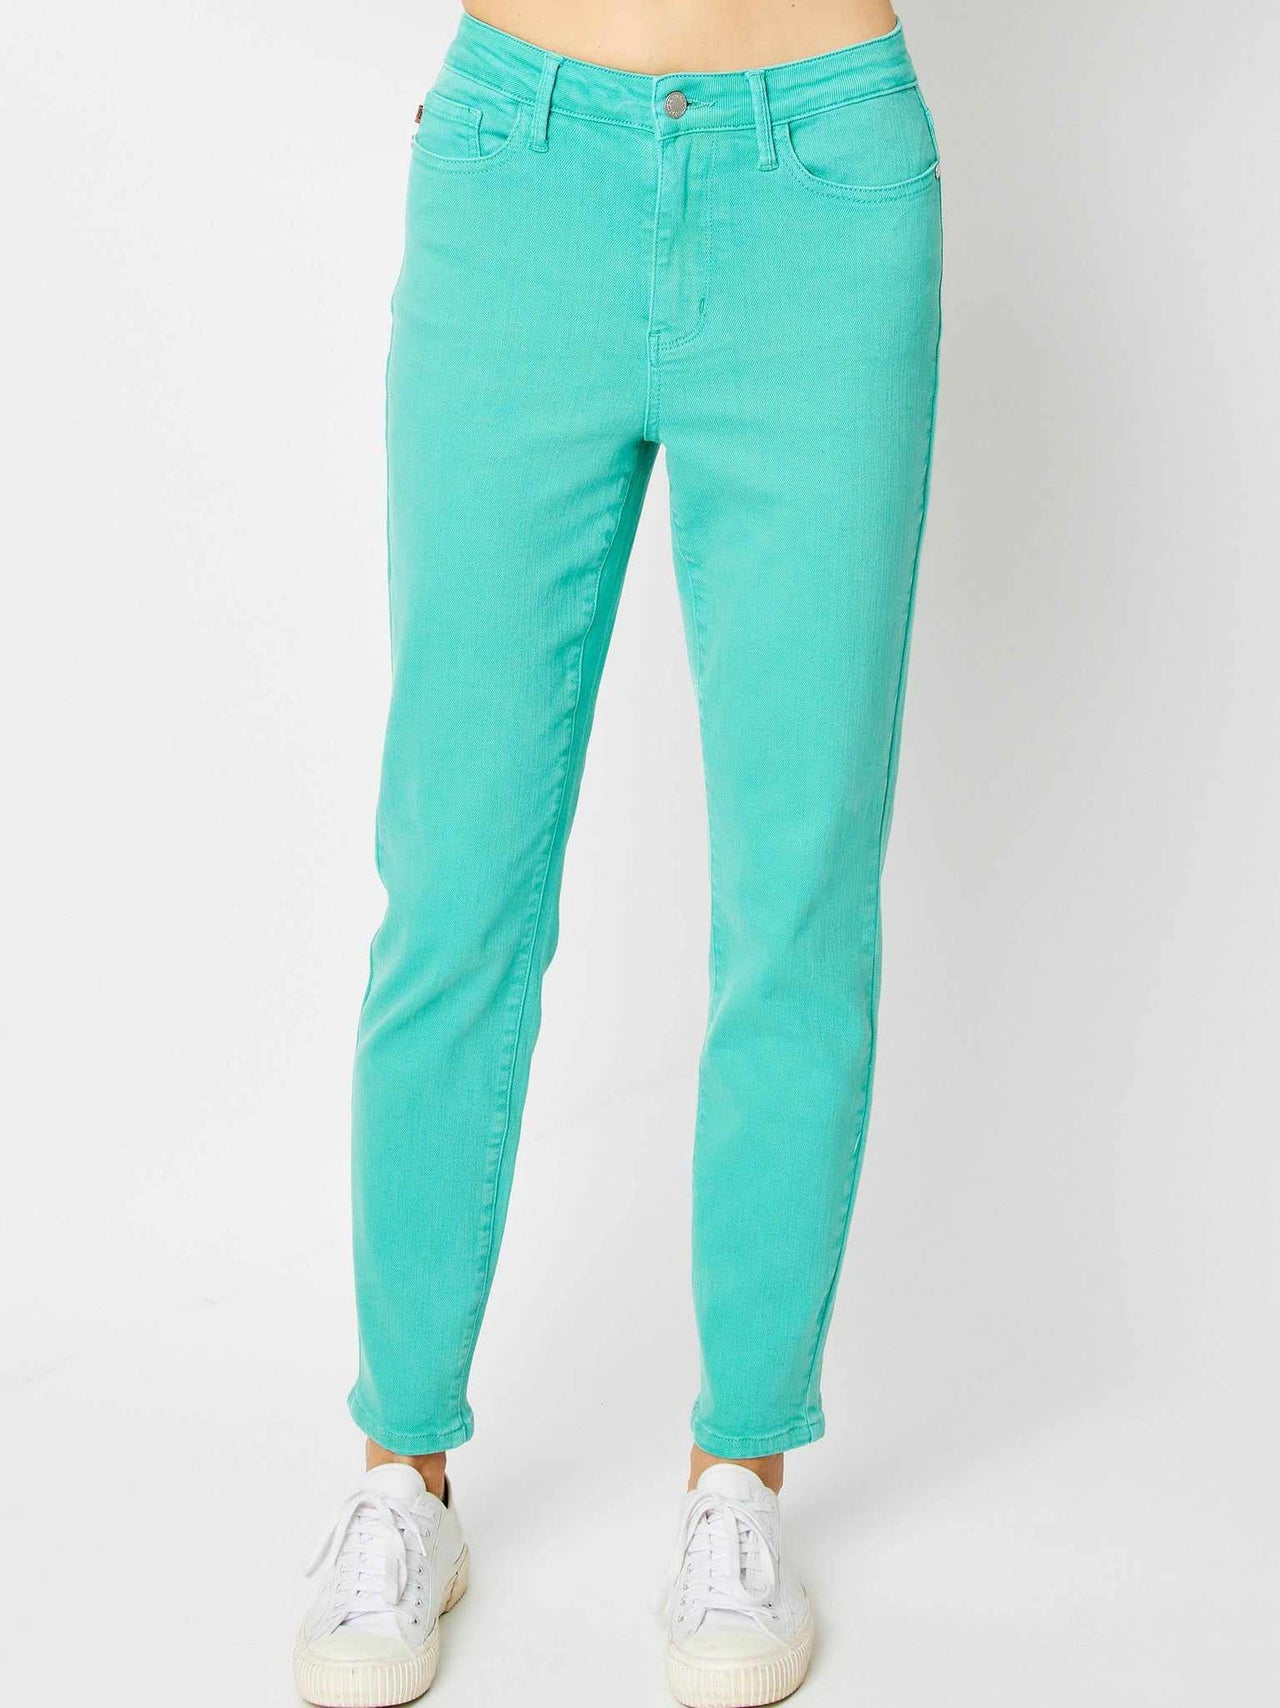 High waisted turquoise slim pants.